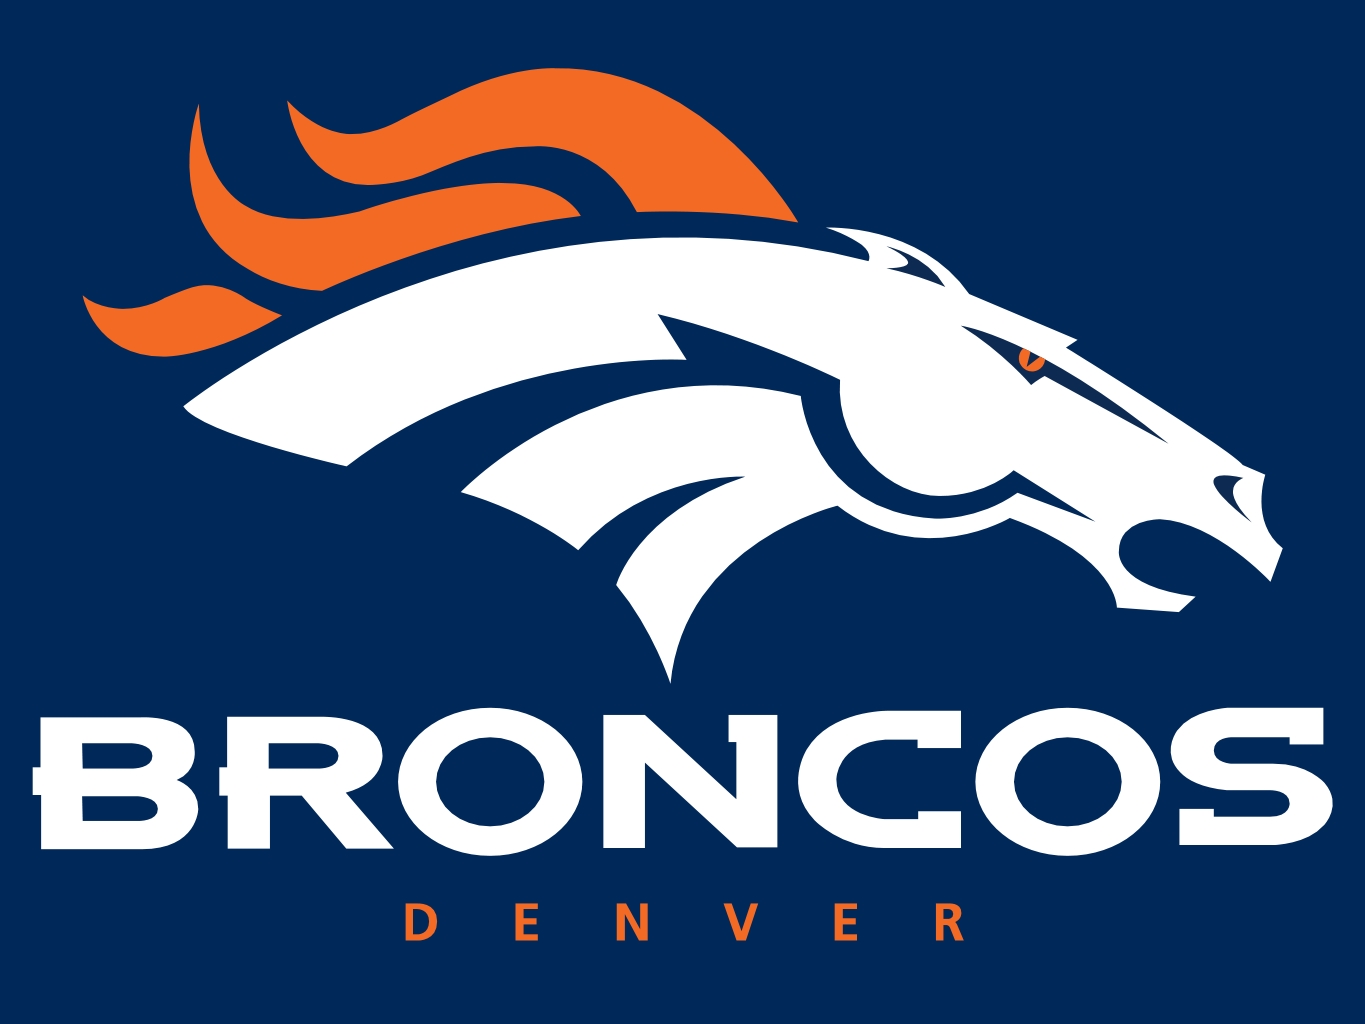 Broncos images